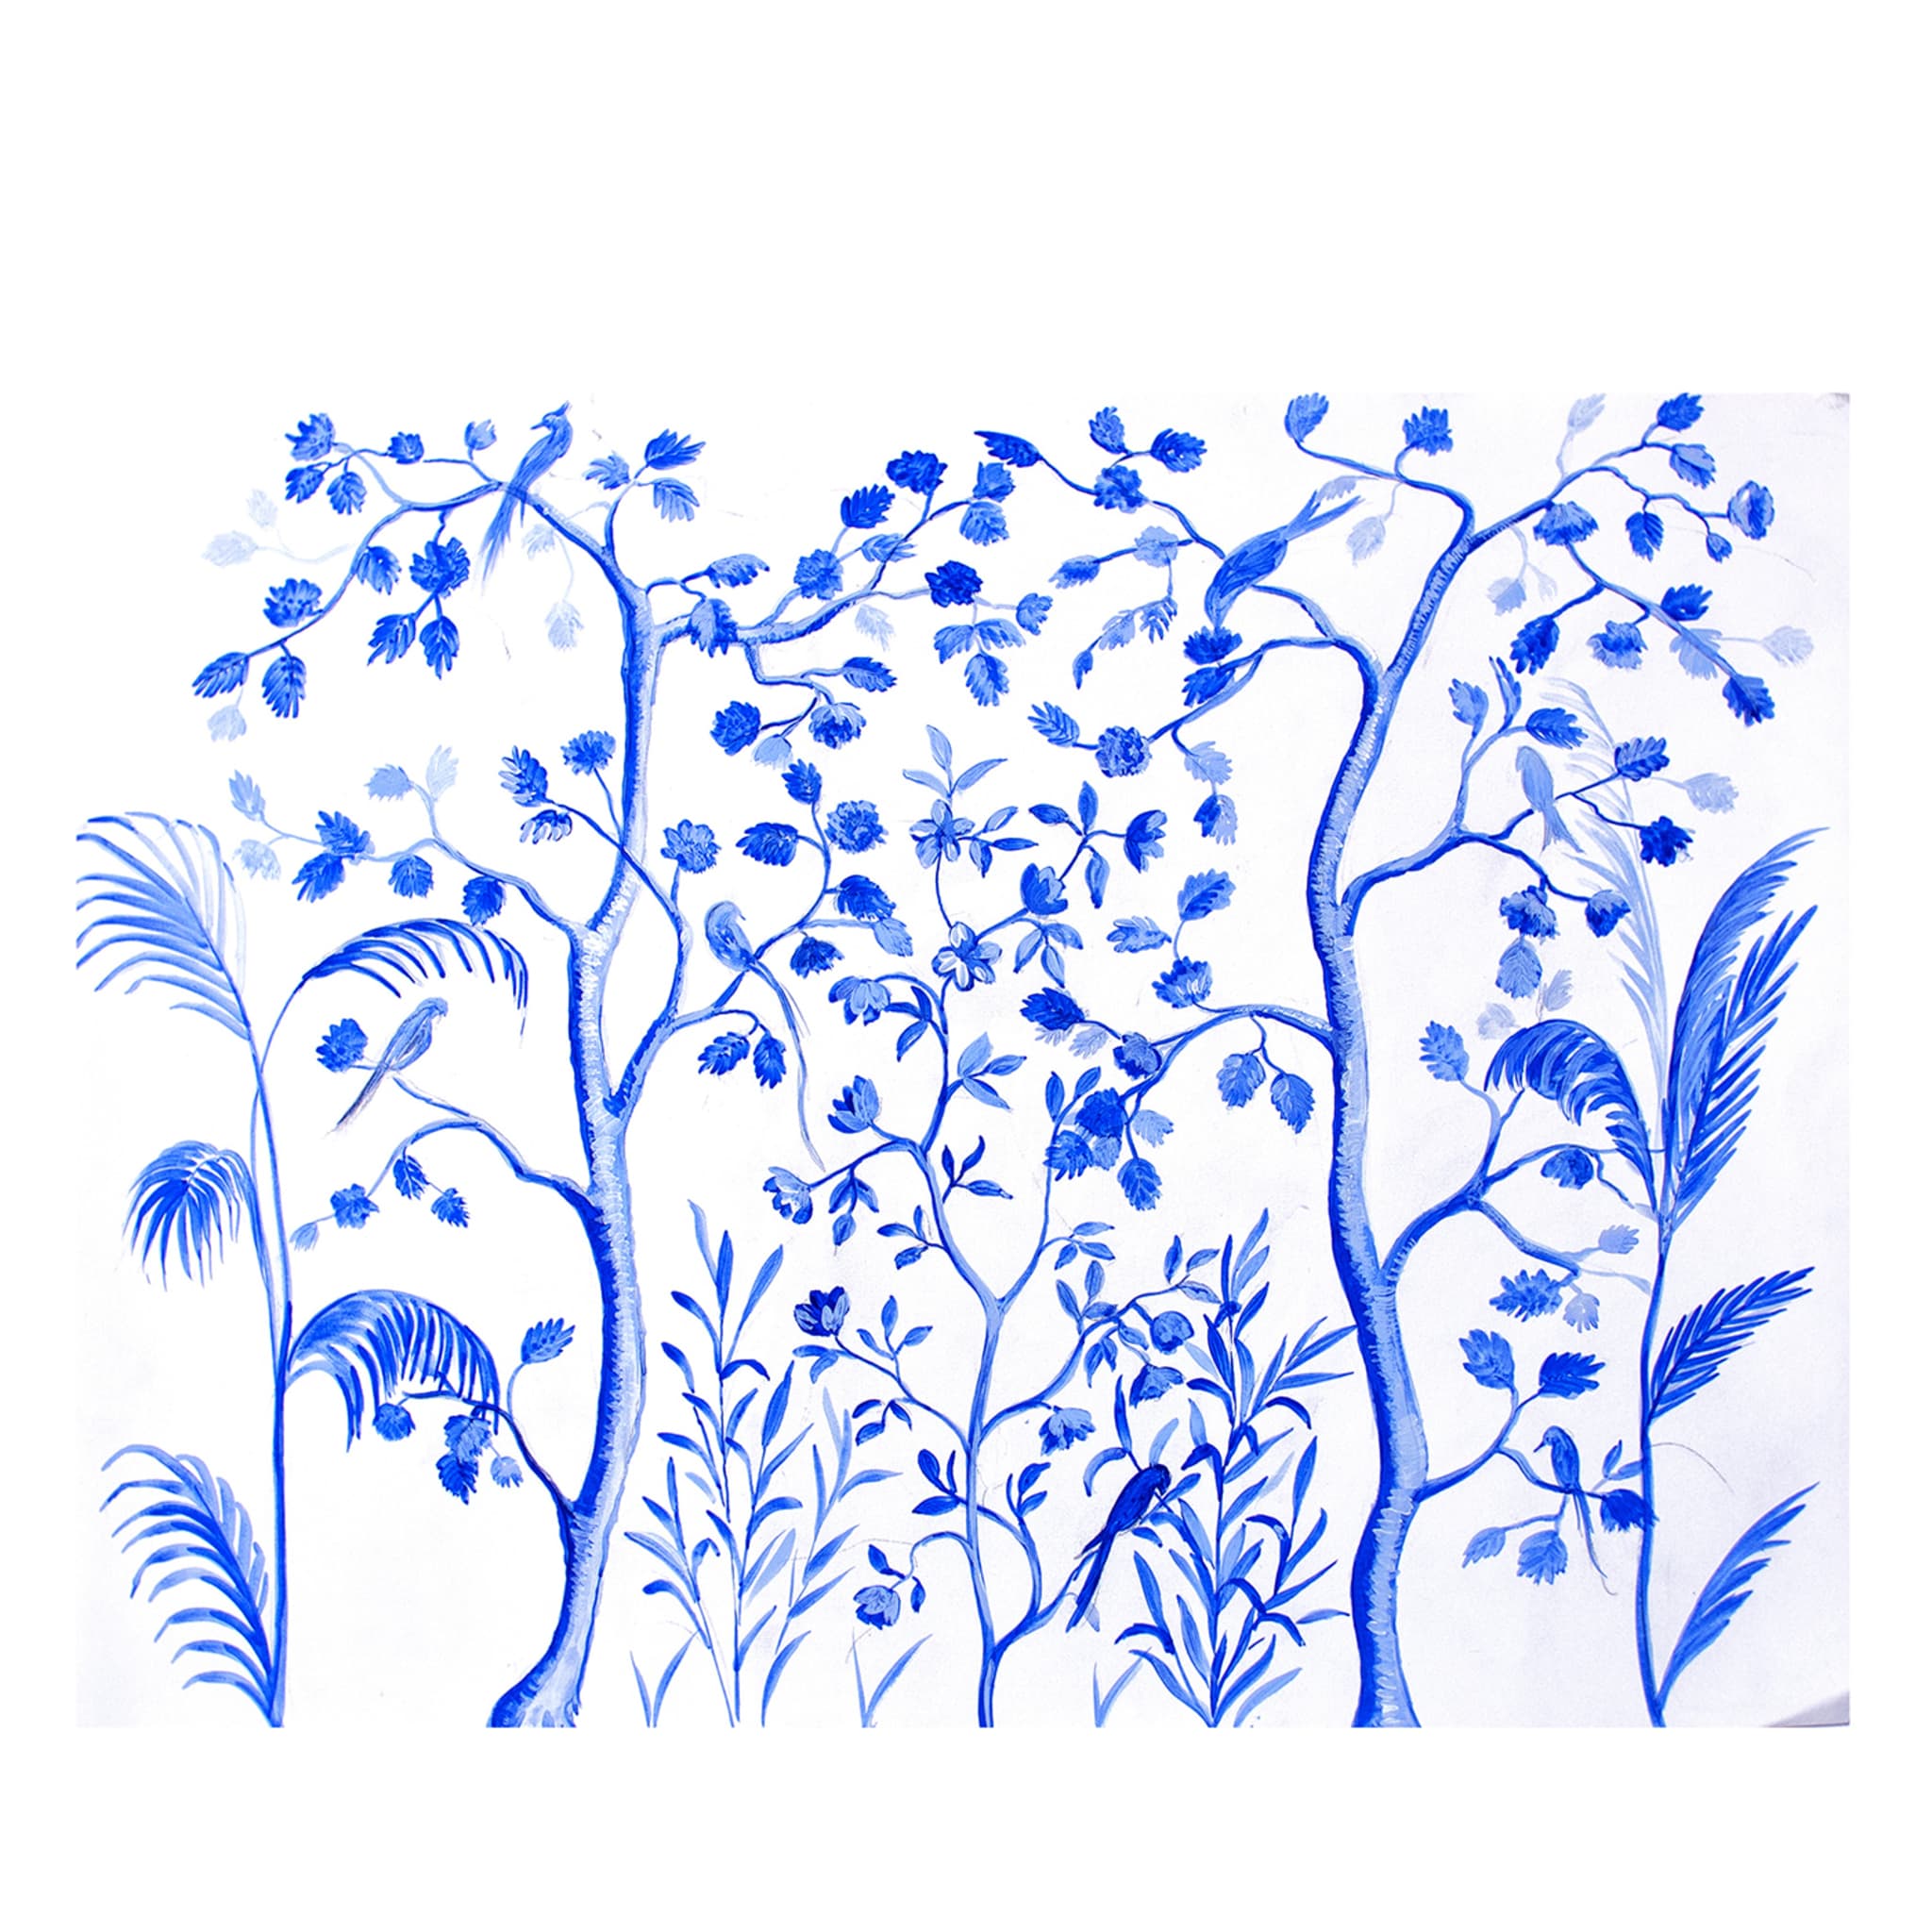 Blue Flowers Wallpaper #2 - Main view